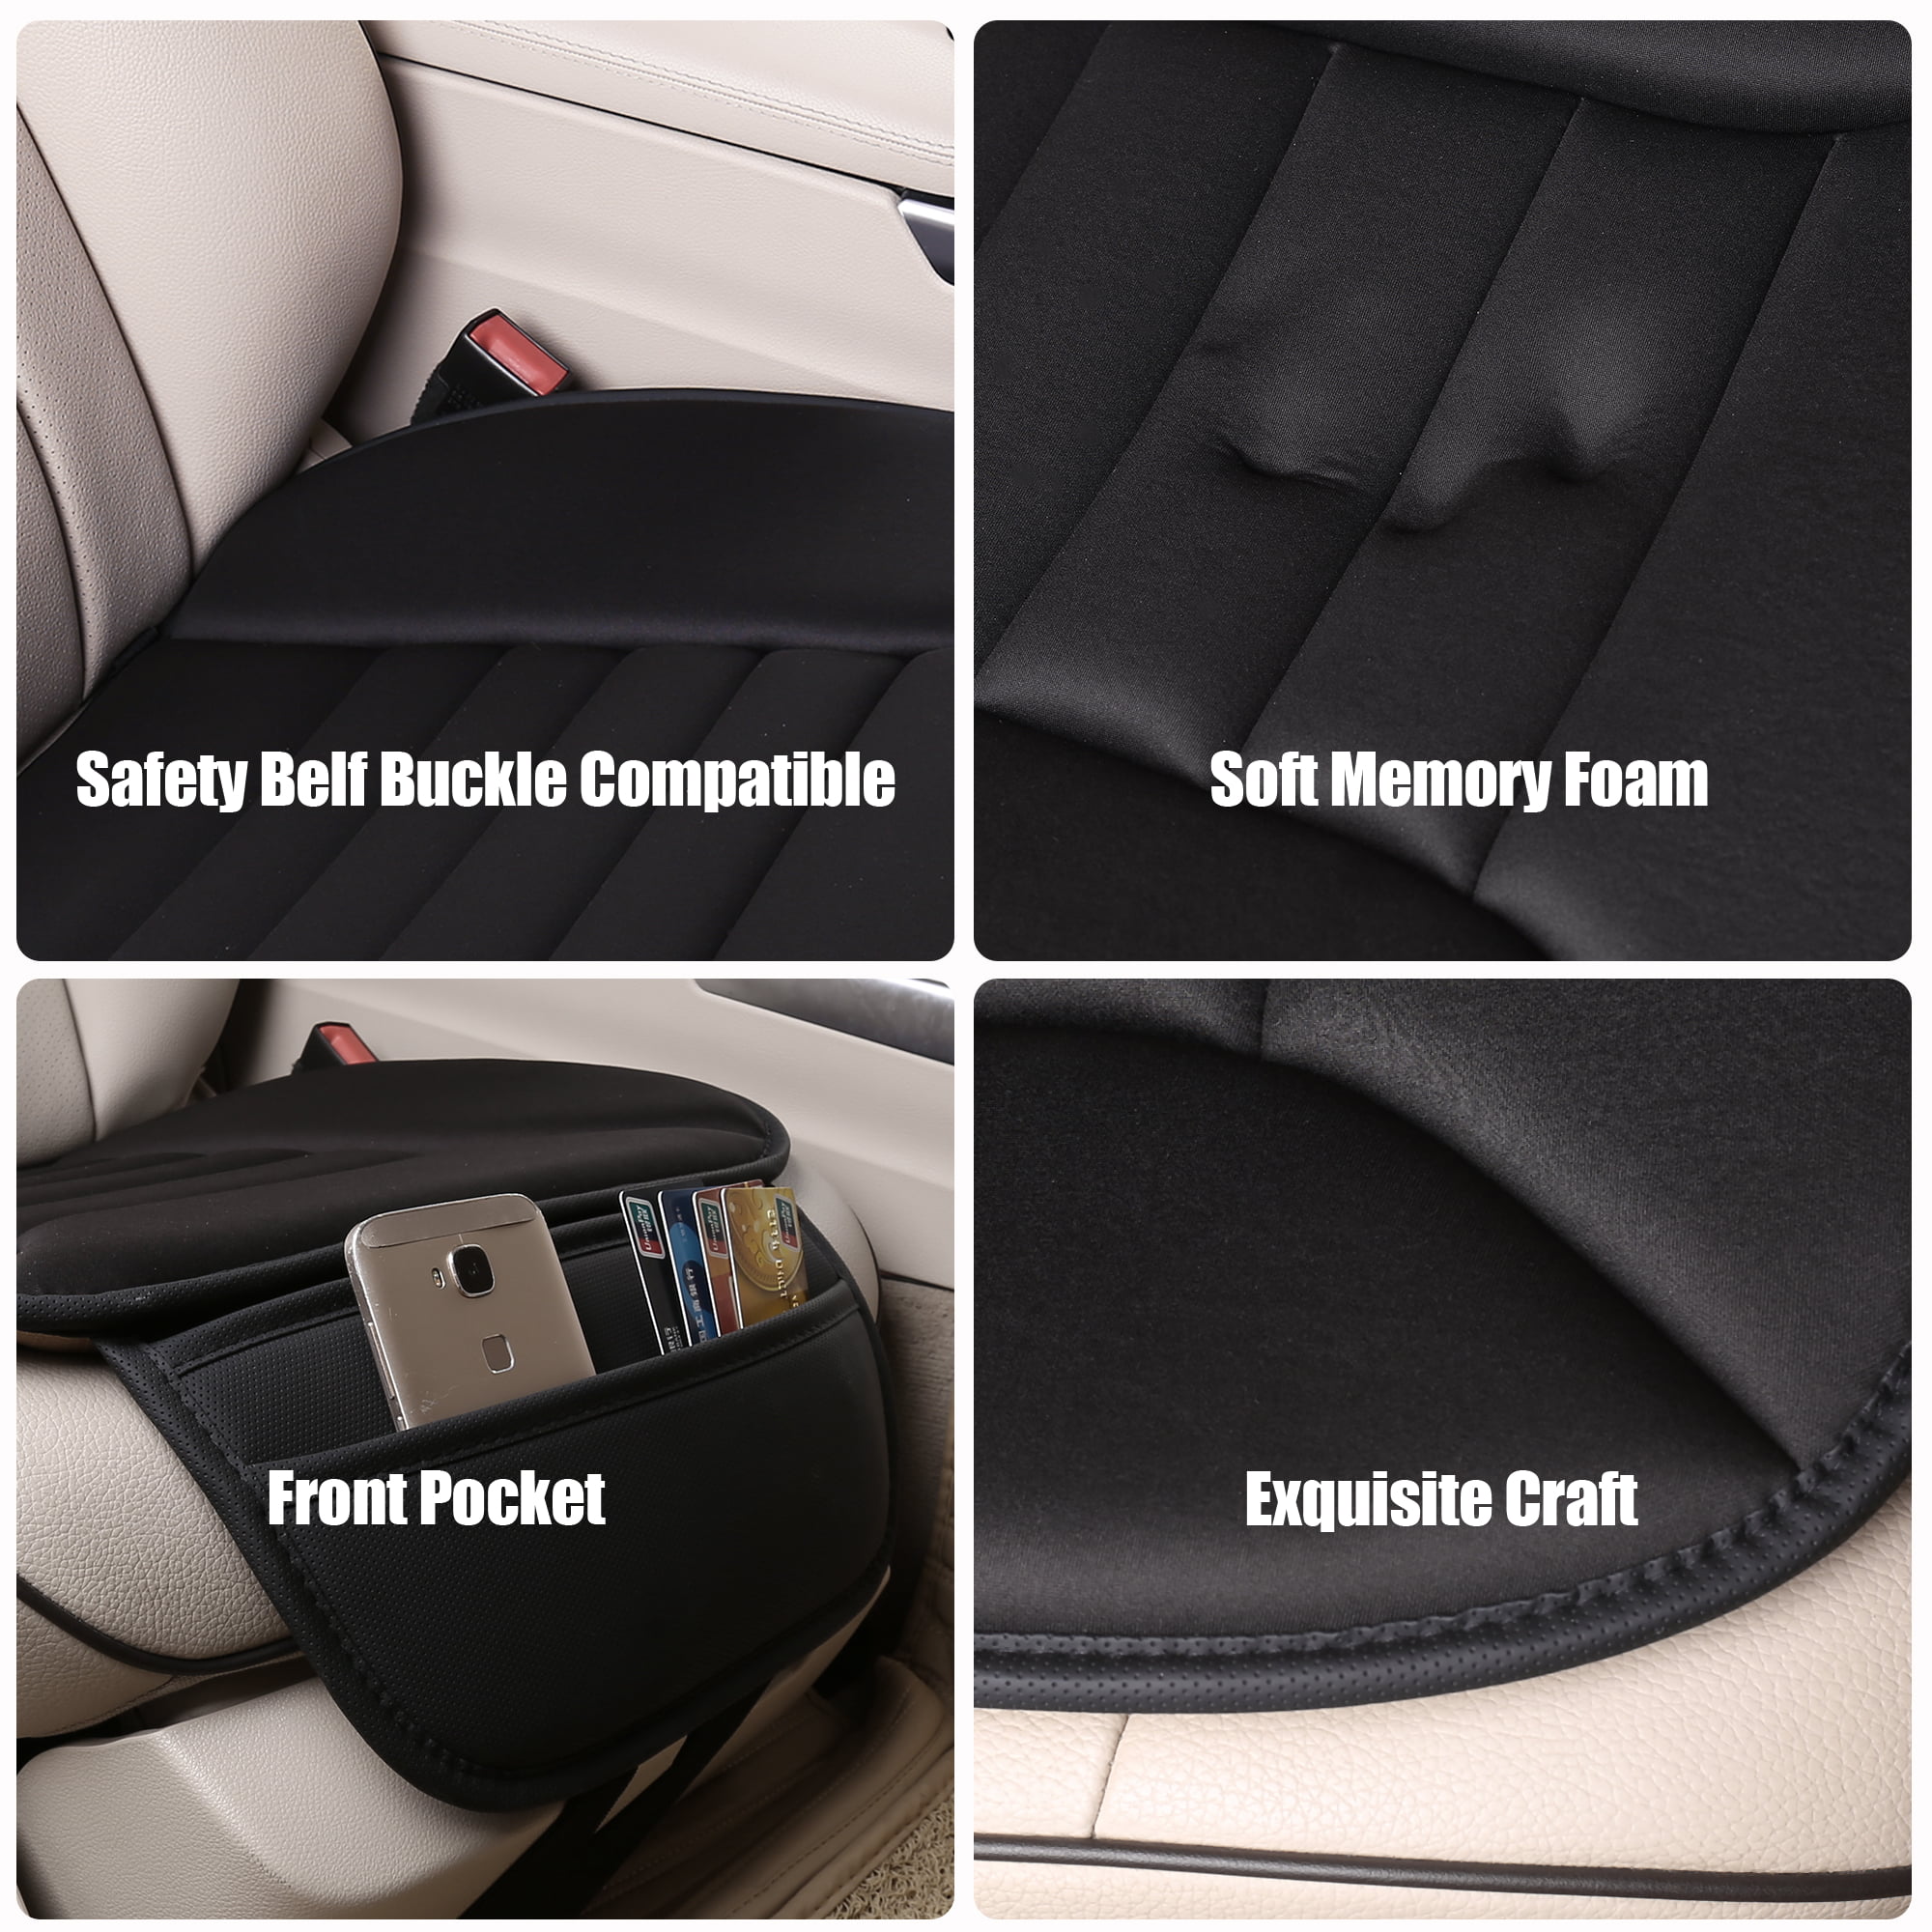 kingphenix Premium Car Seat Cushion, Memory Foam Morocco